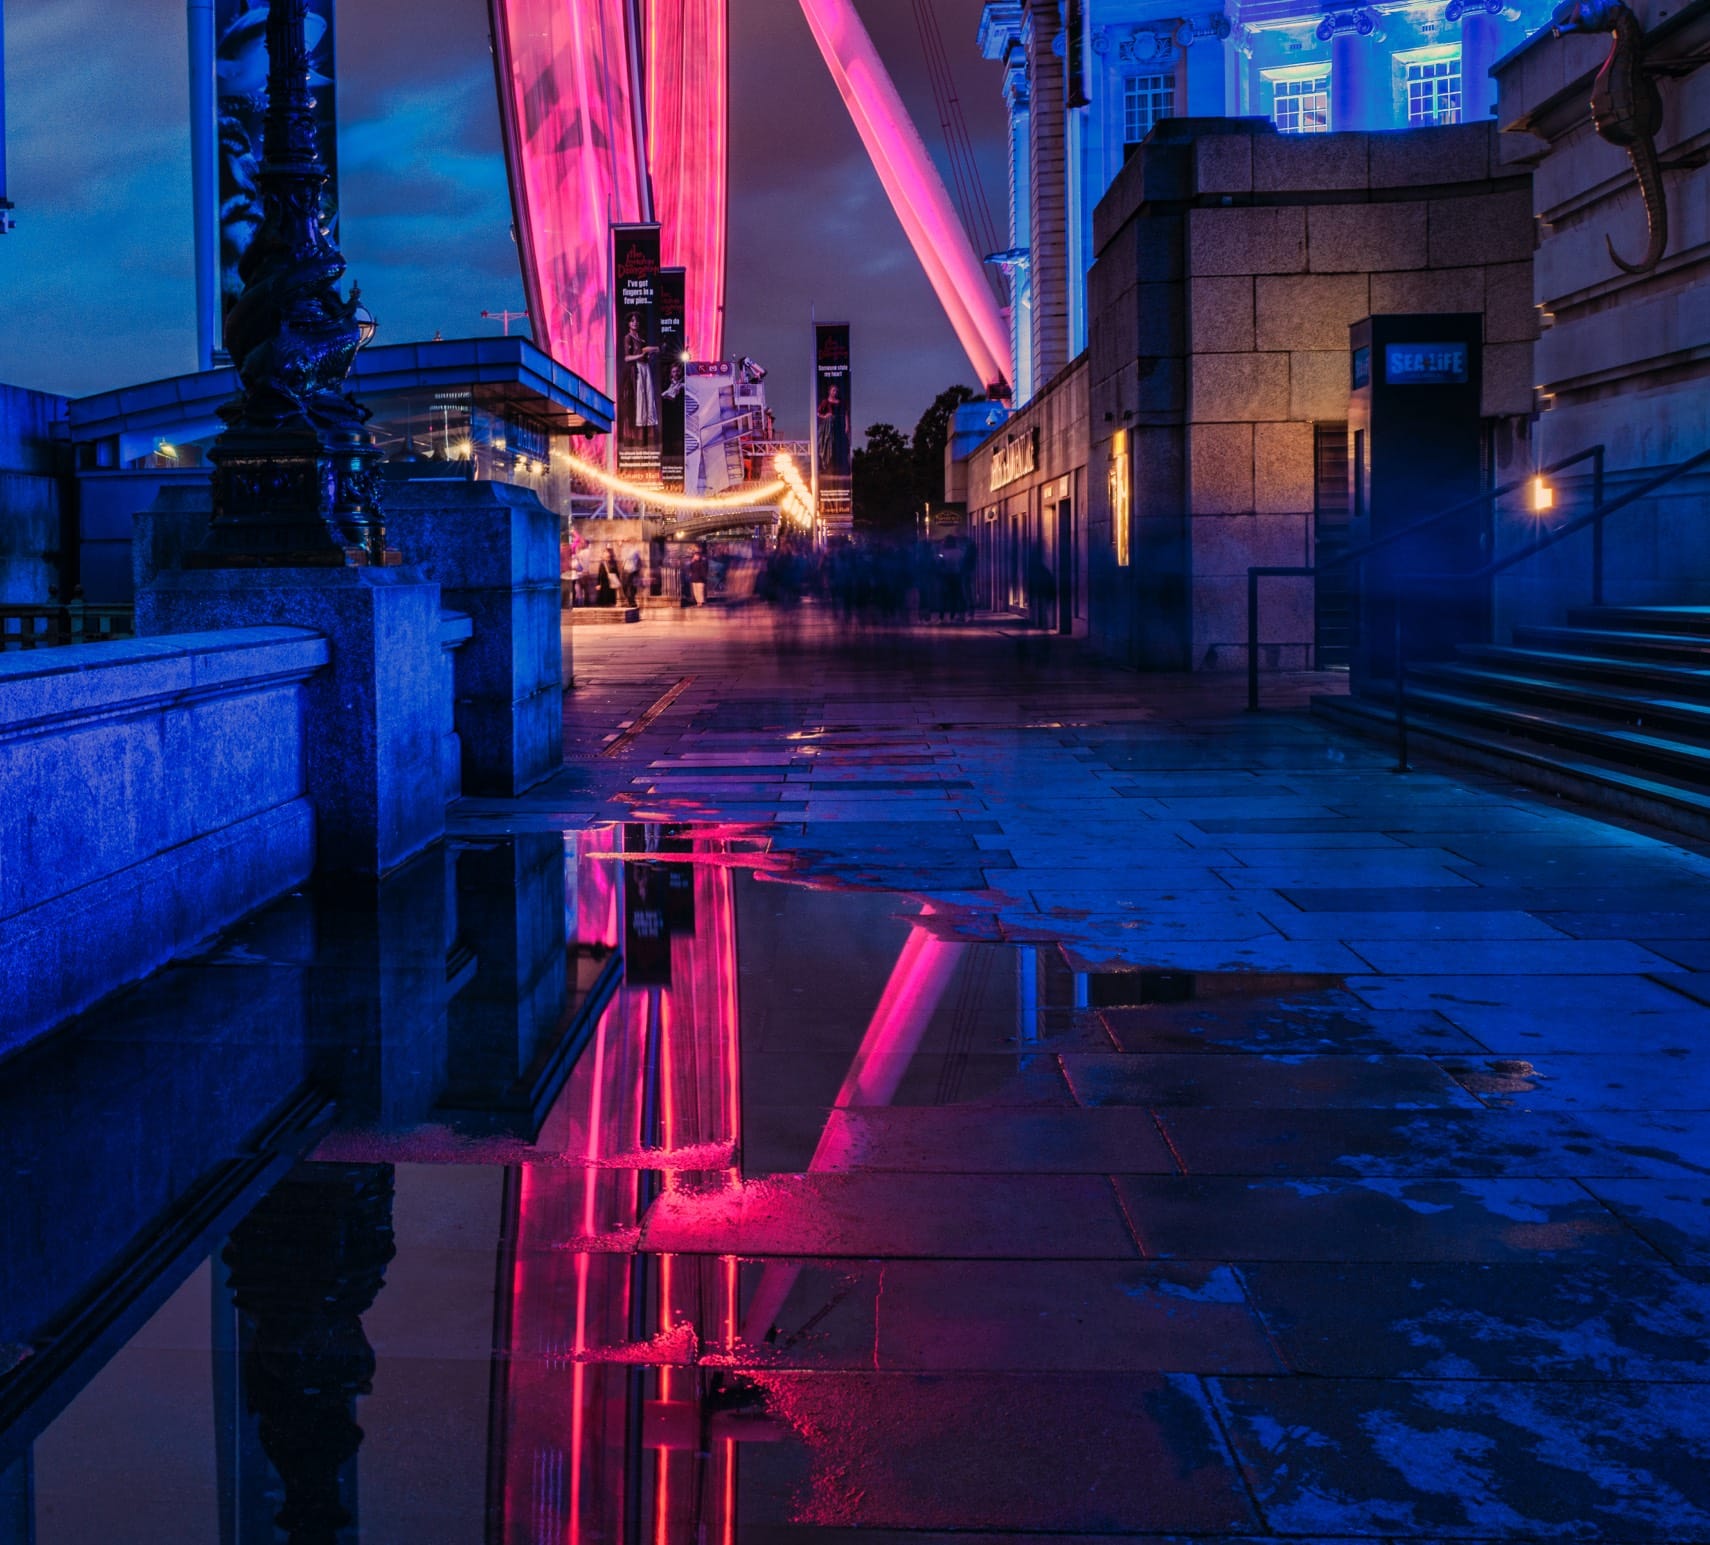 London at night, neon lights